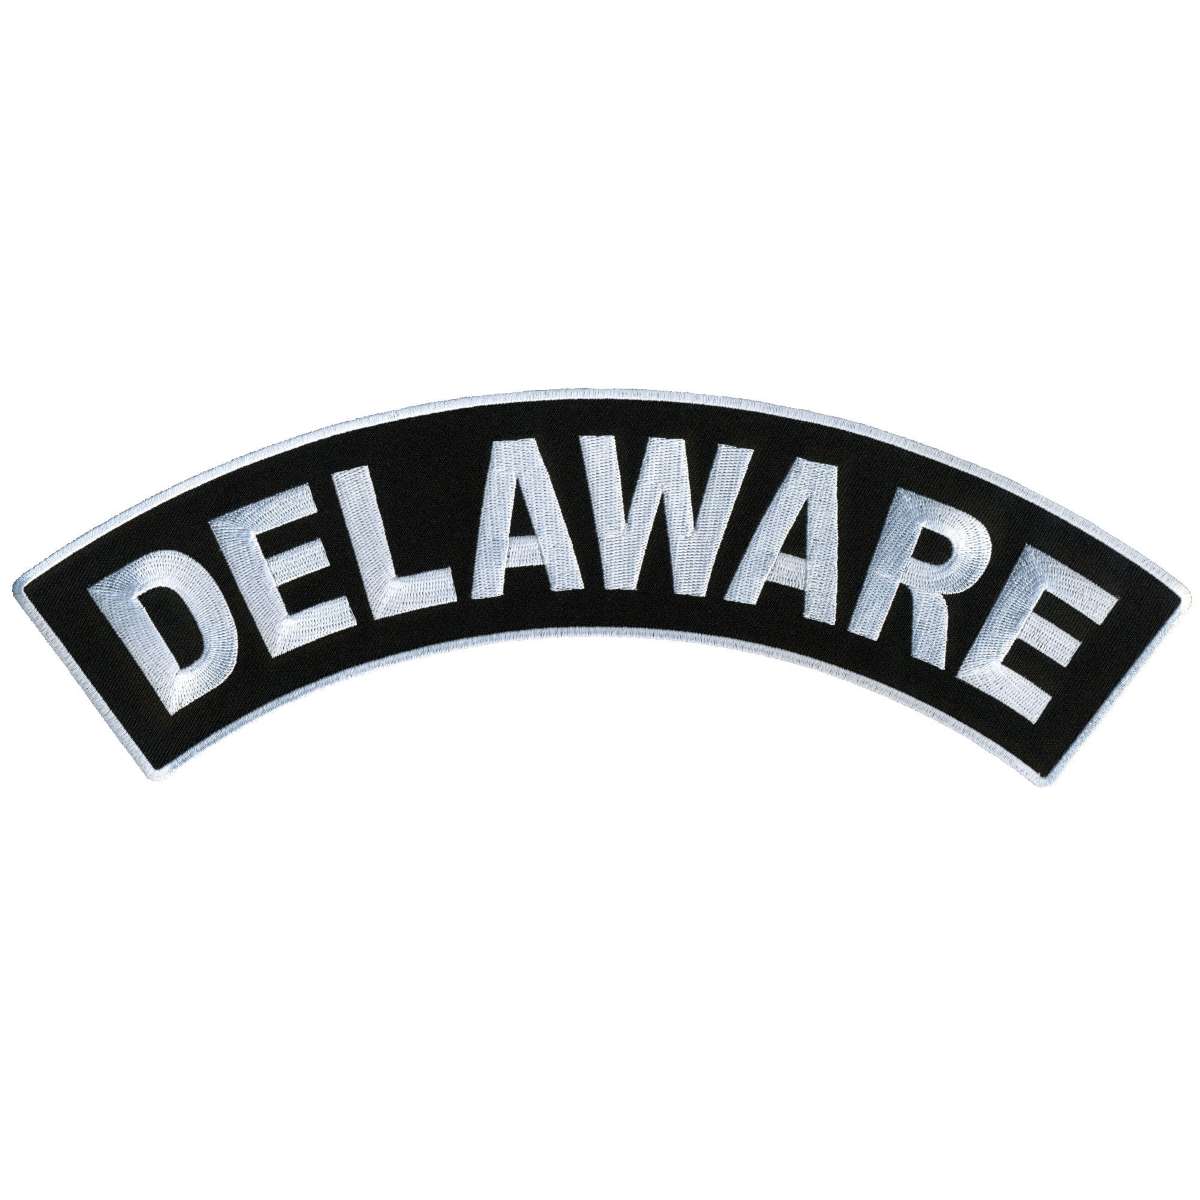 Hot Leathers Delaware 12” X 3” Top Rocker Patch PPM4015